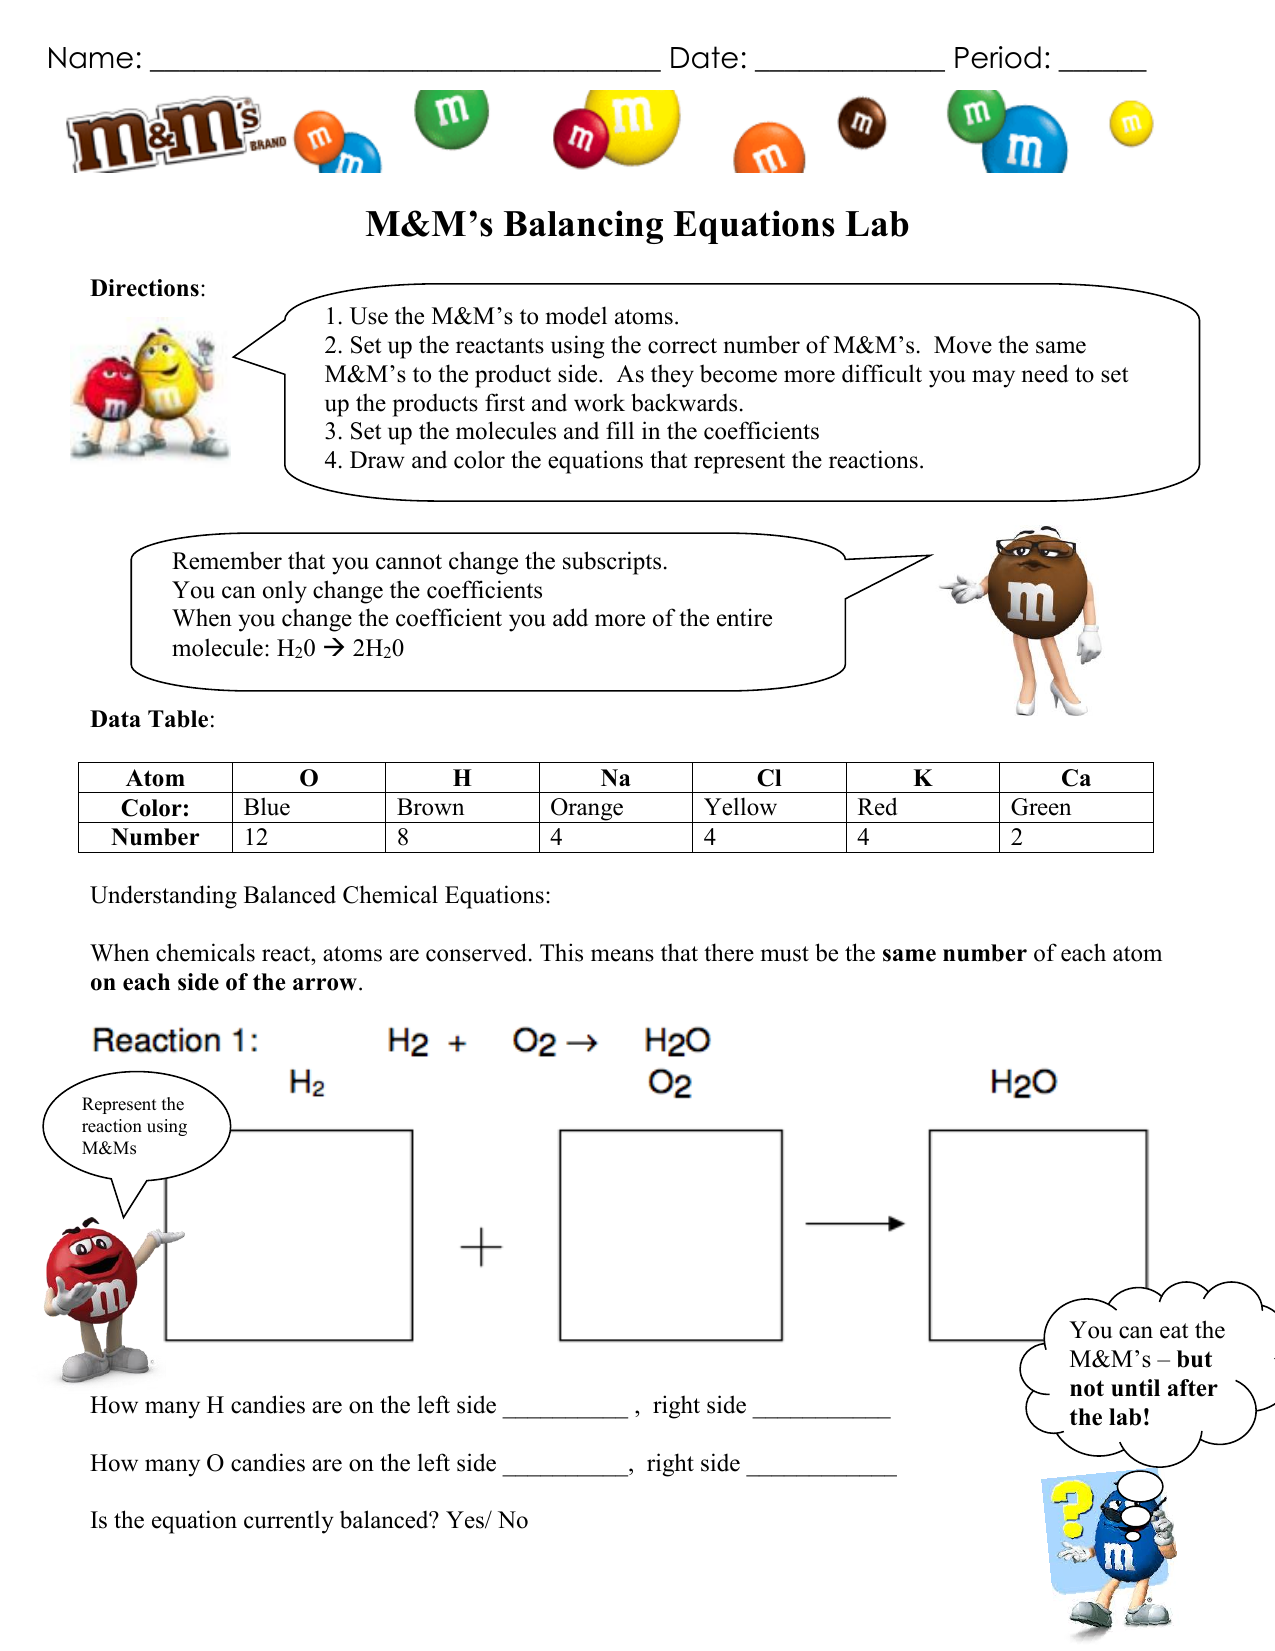 m-m-balancing-equations-answer-key-balancing-equations-lesson-plan